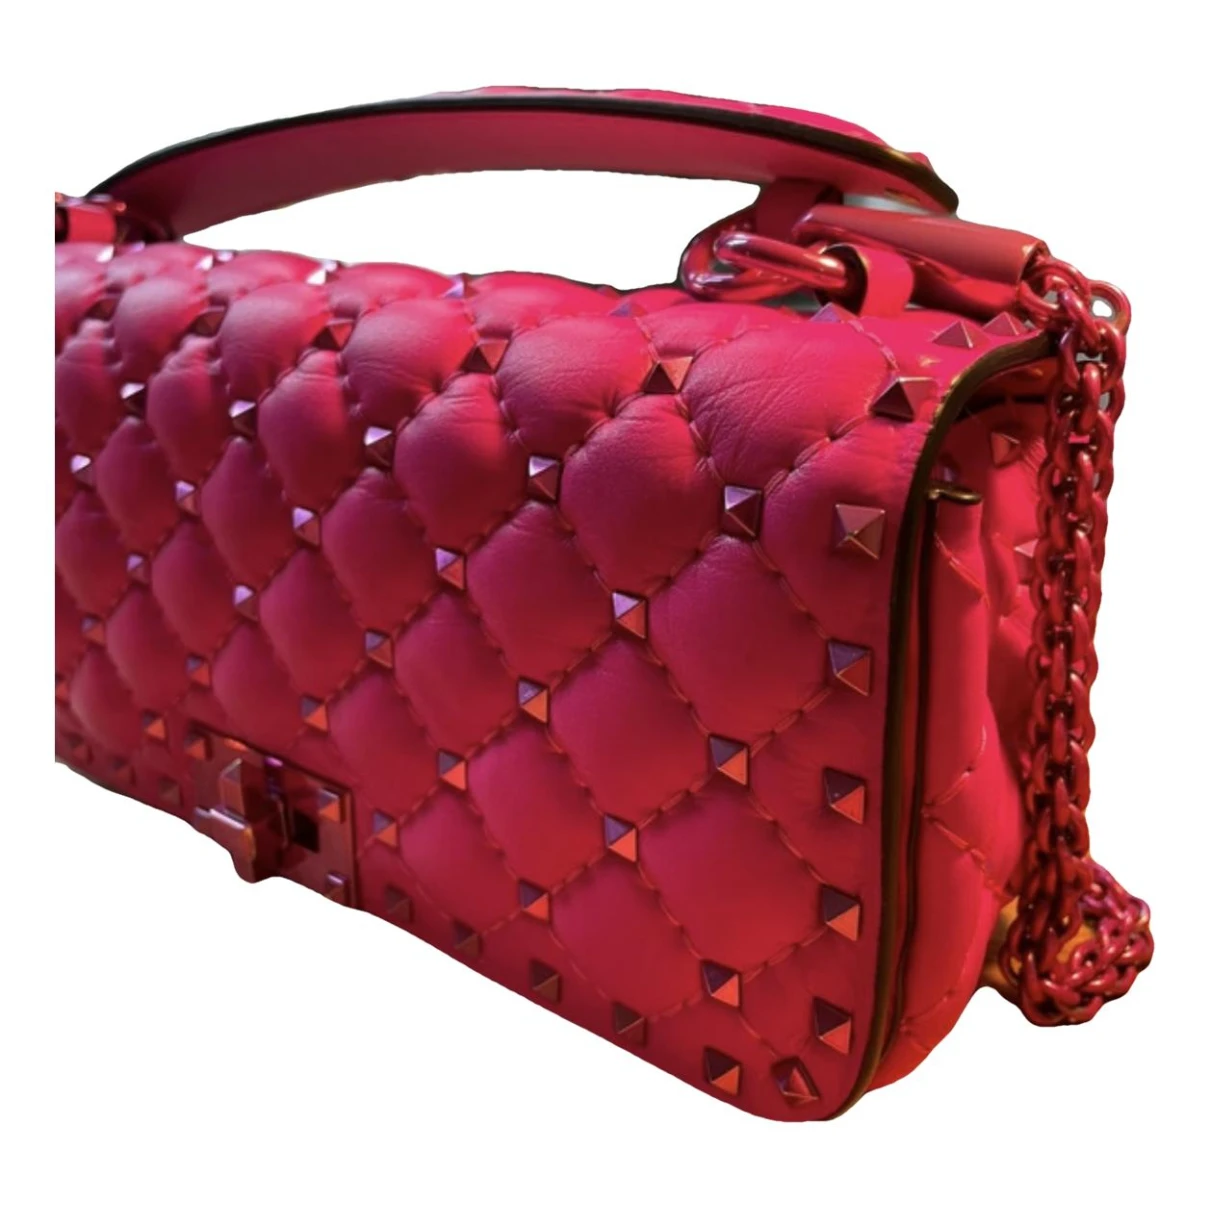 Pre-owned Valentino Garavani Rockstud Spike Leather Handbag In Pink